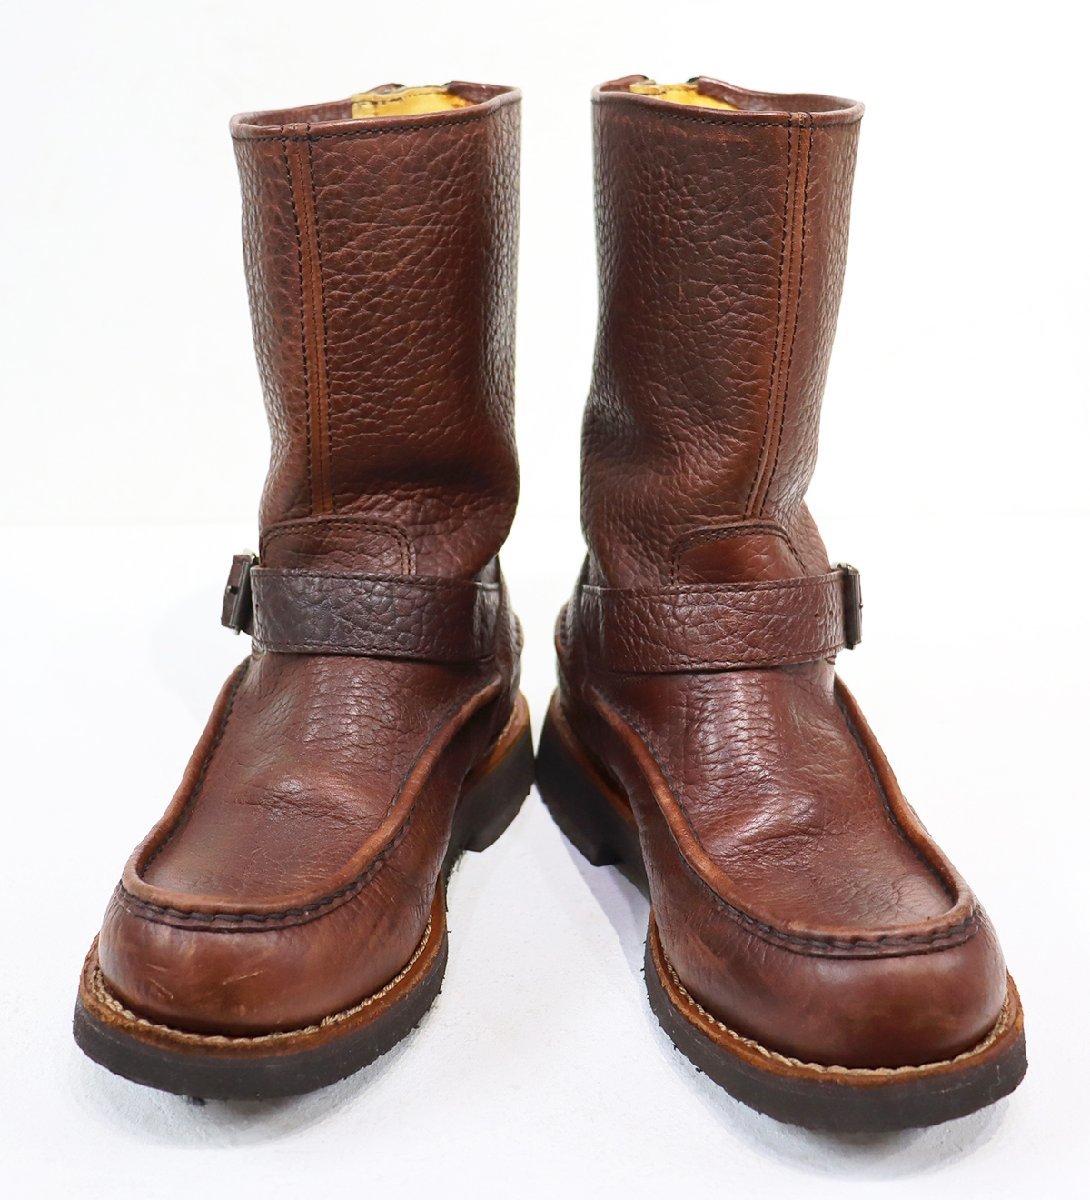 Chippewa (チペワ) #24948 / 10inch Moc Toe Back Zip Boots / ウォータープルーフ バックジップブーツ 美品 size 6.5M